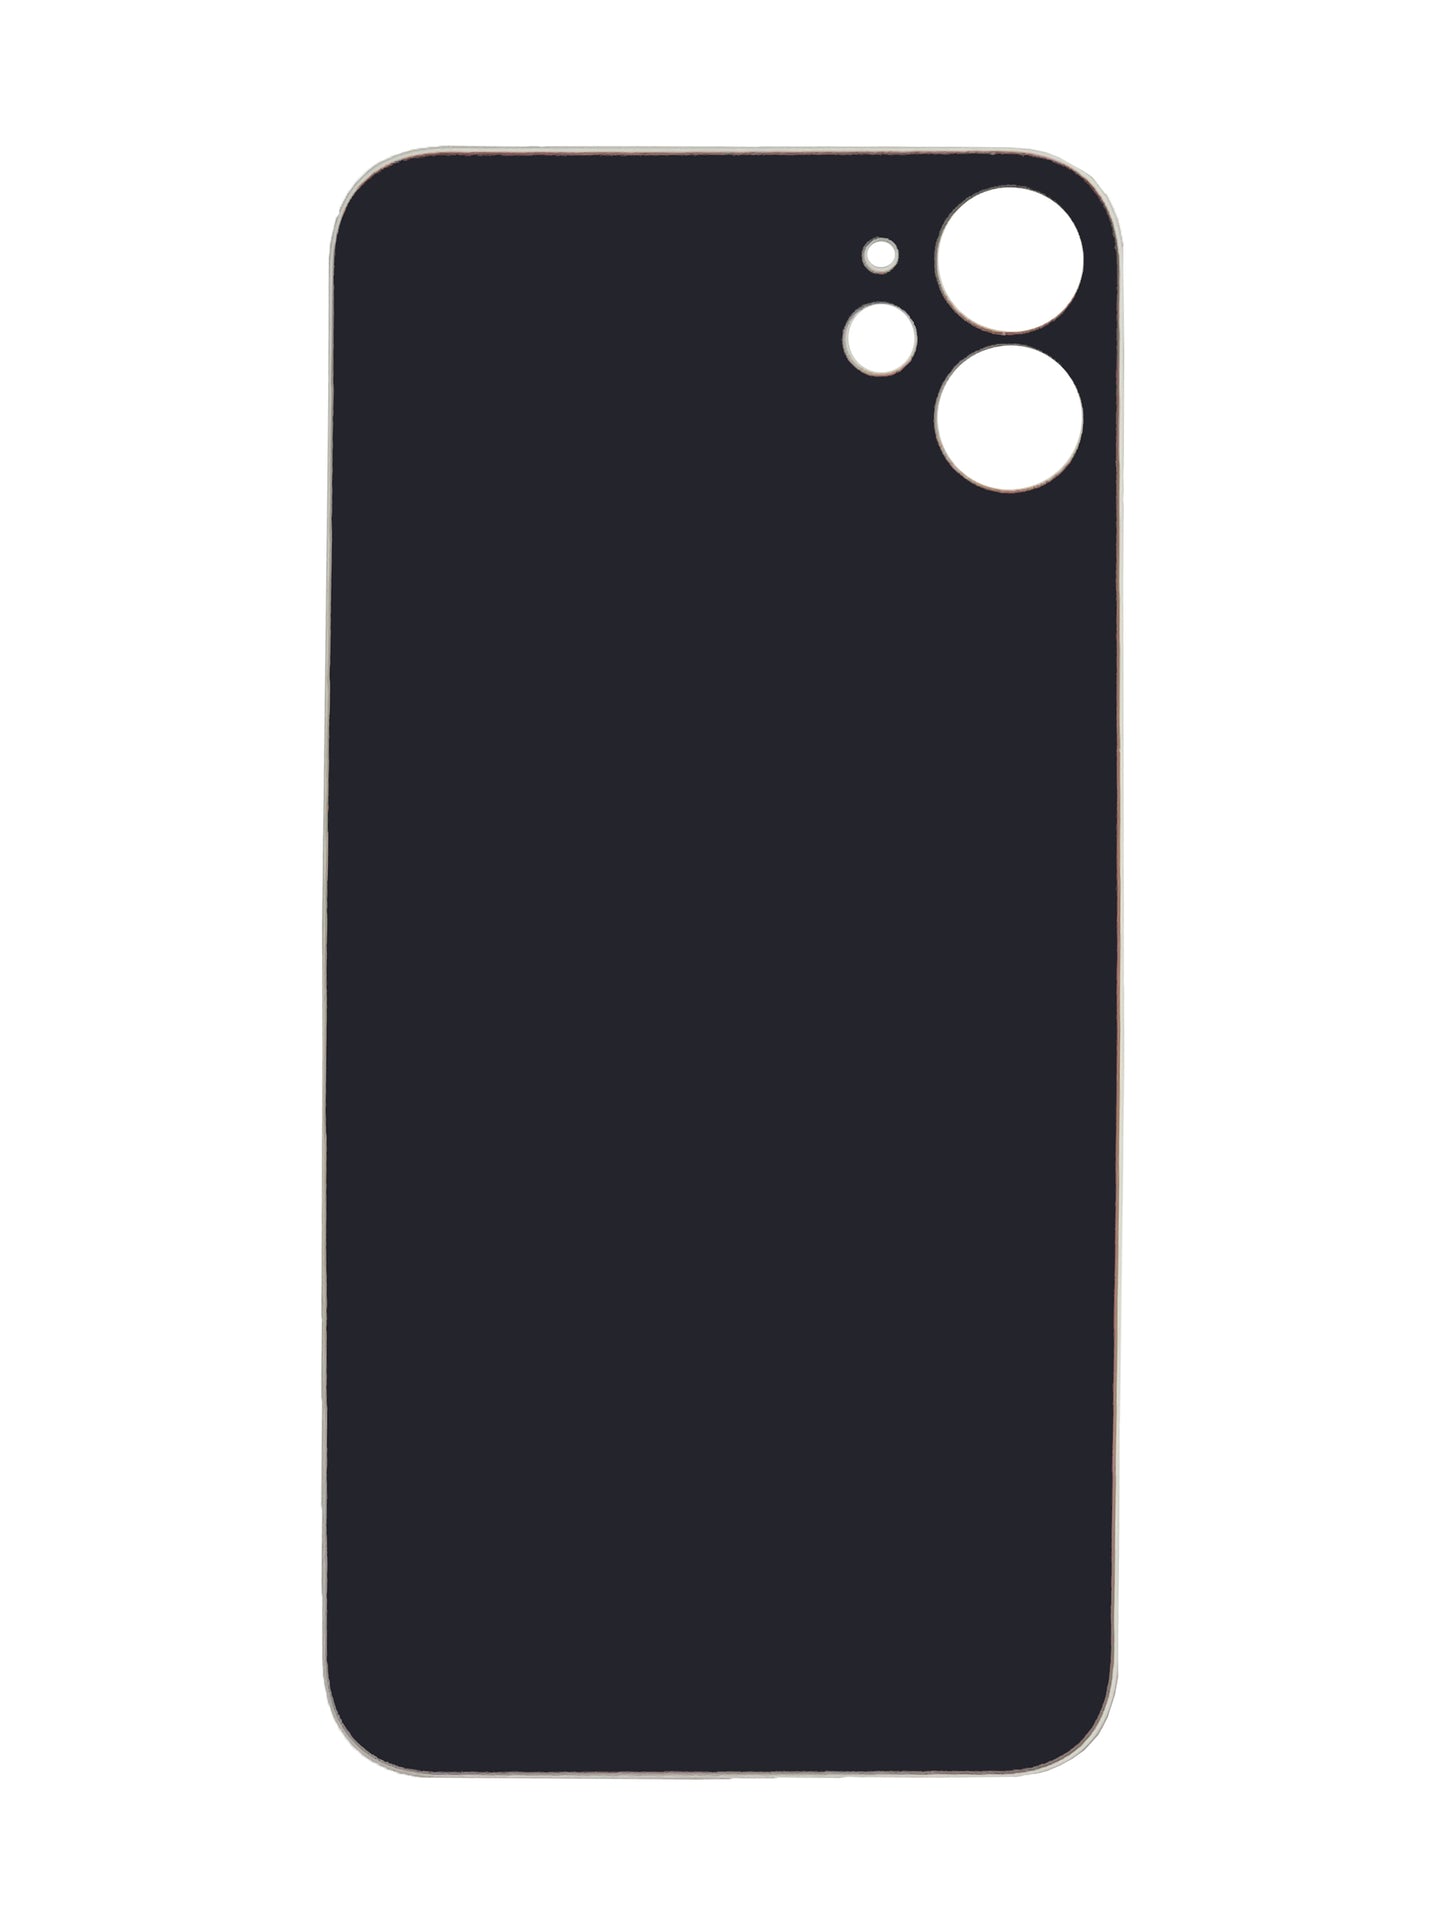 iPhone 11 Back Glass (No Logo) (White)